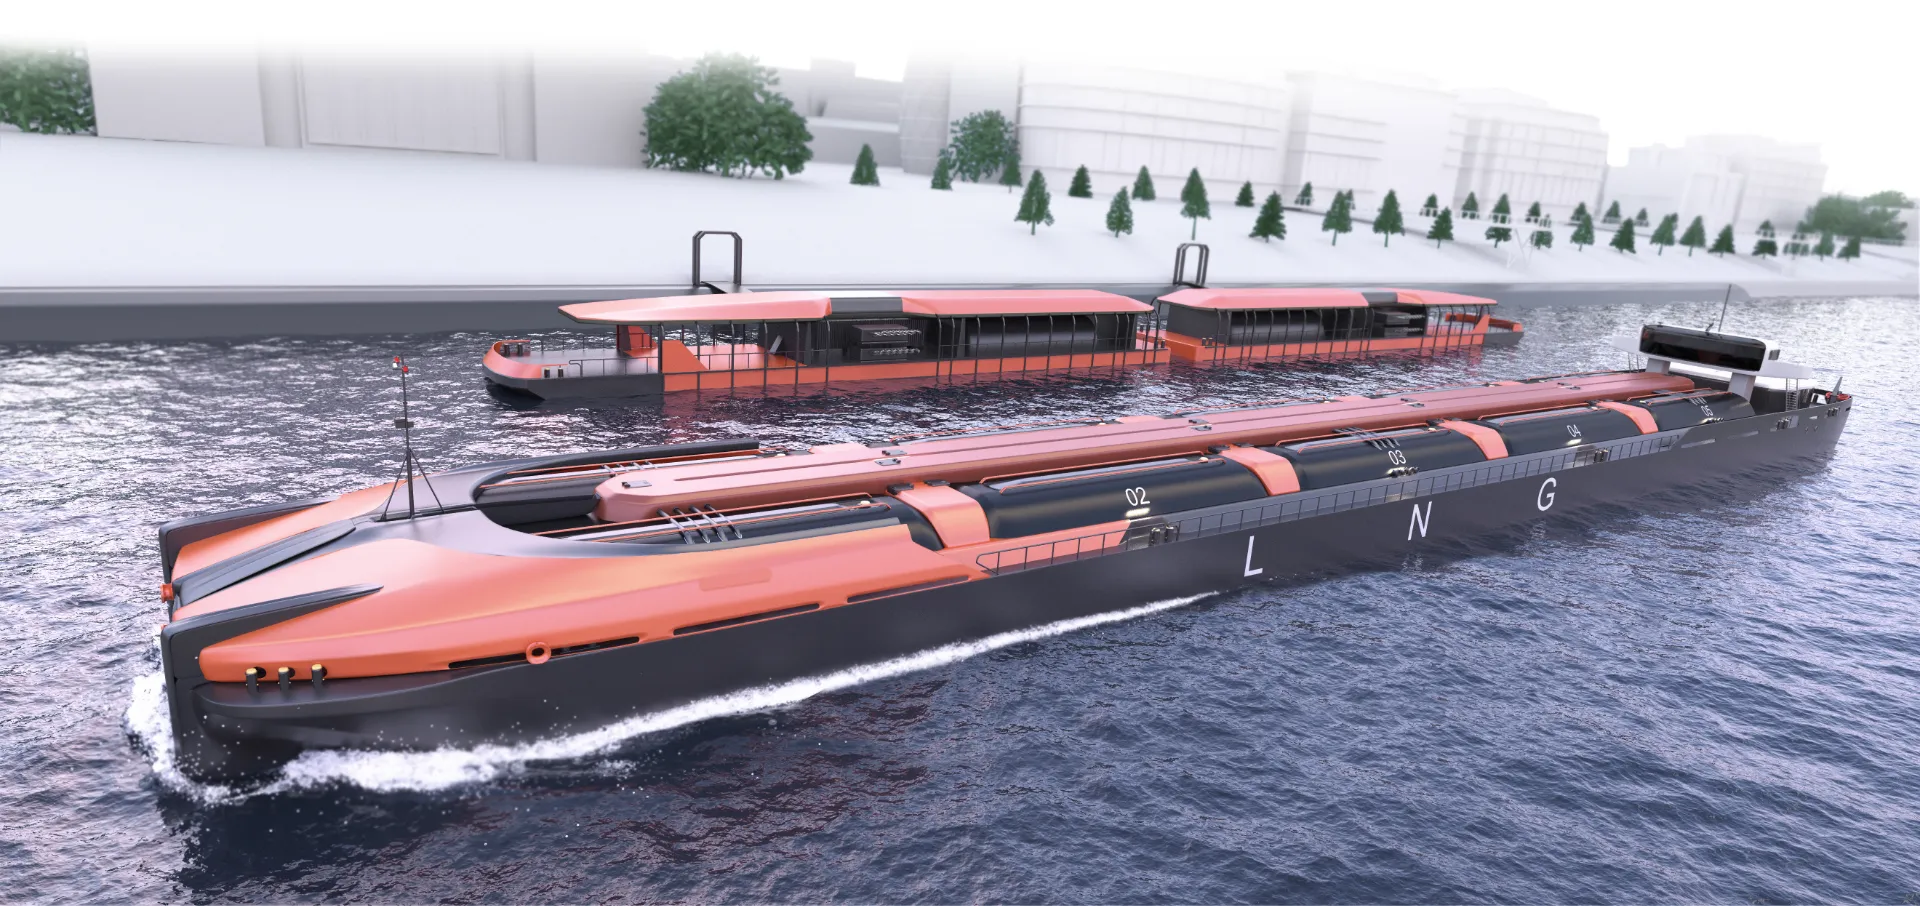 LNG Tanker visualizations_Design by Werkemotion